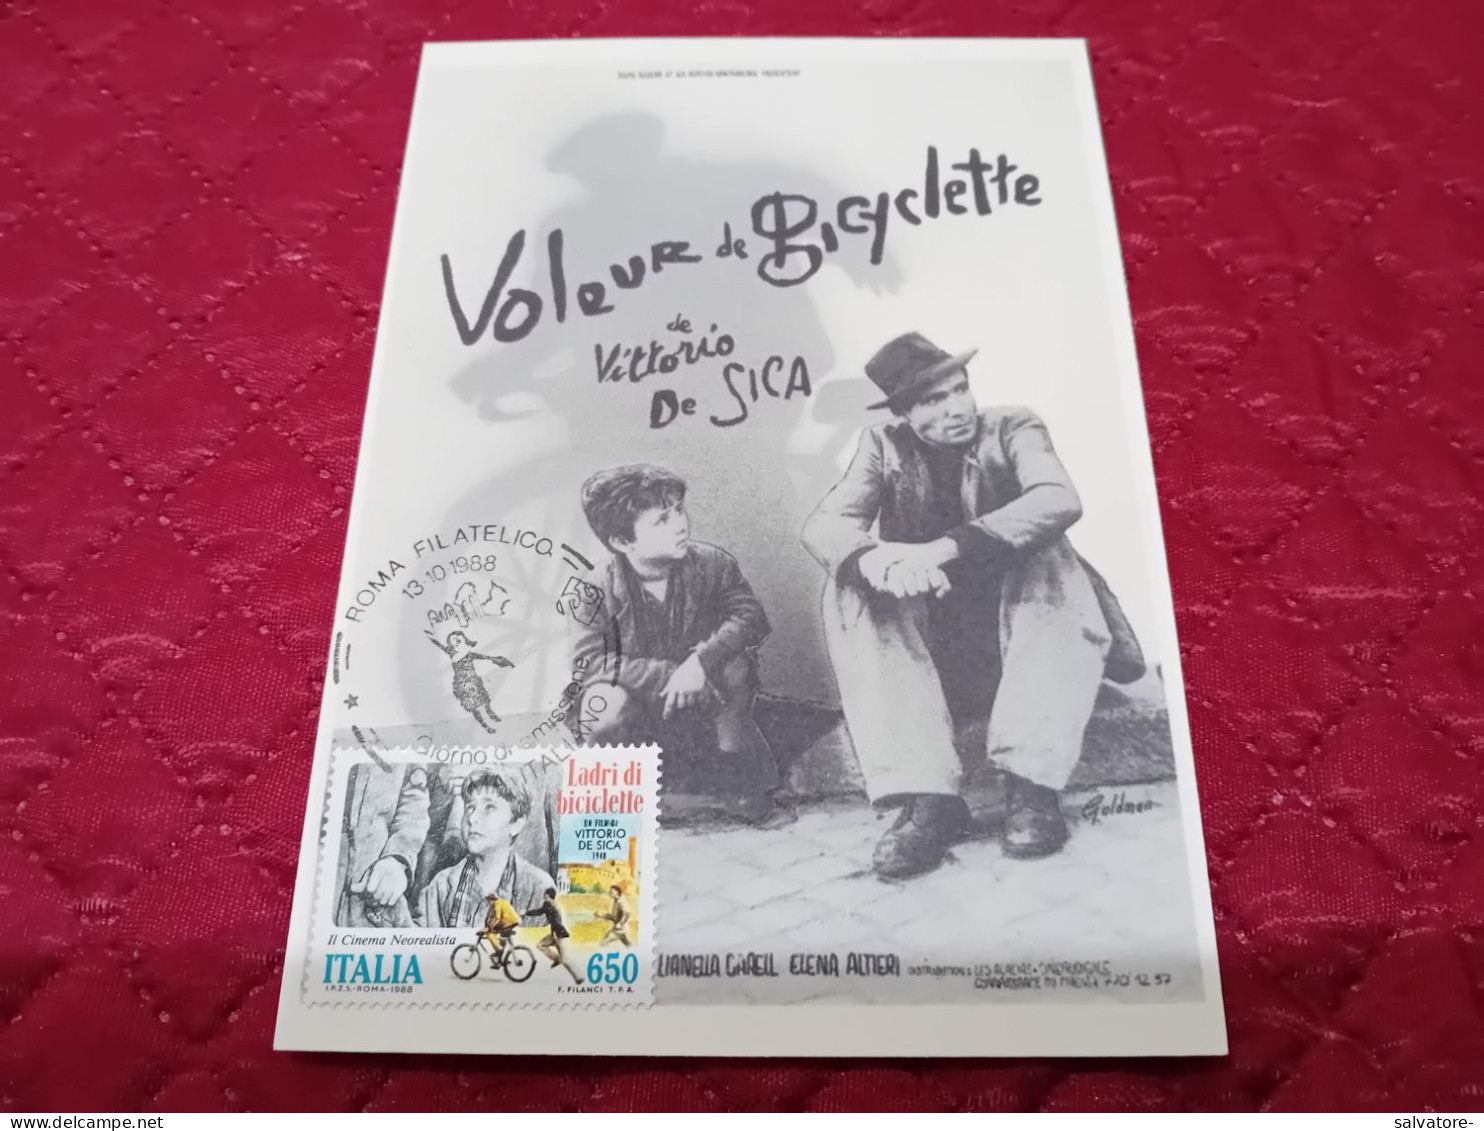 CARTOLINA VOLEUR DE BICICLETTE 1988 - Cinema Advertisement